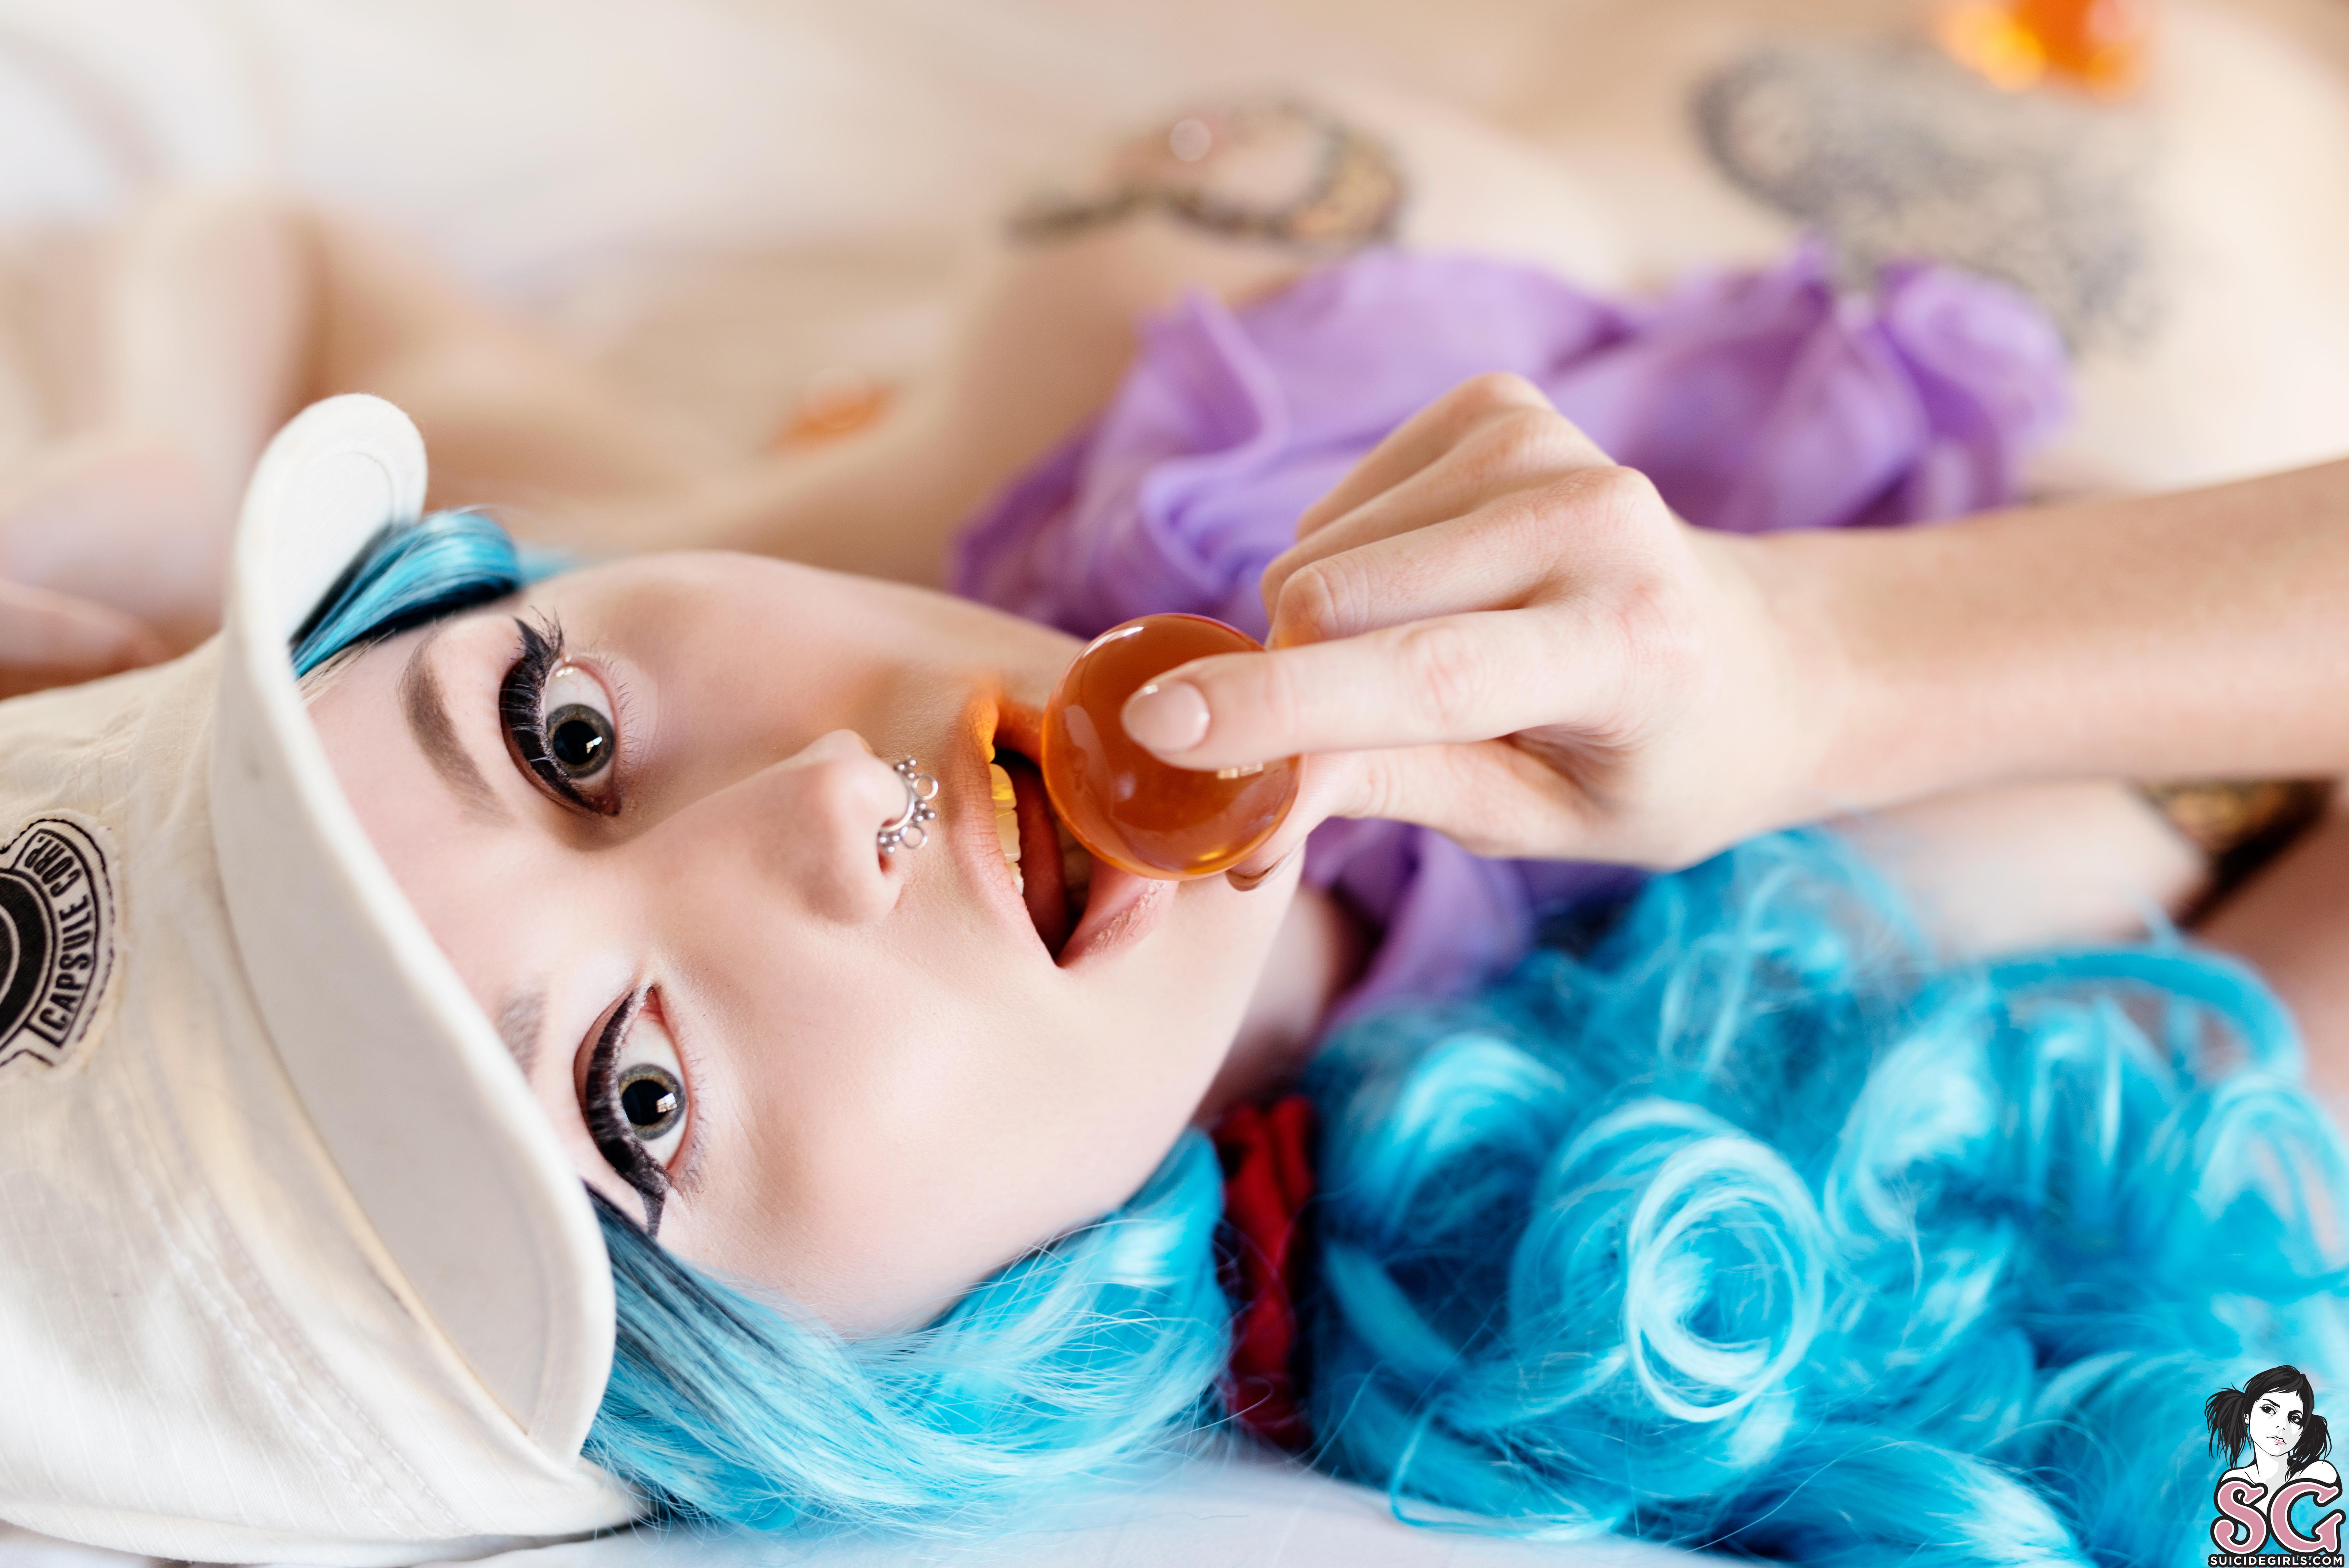 People 6016x4016 Lotticia Suicide Girls tattoo women blue hair Bulma Dragon Ball model in bed watermarked closeup